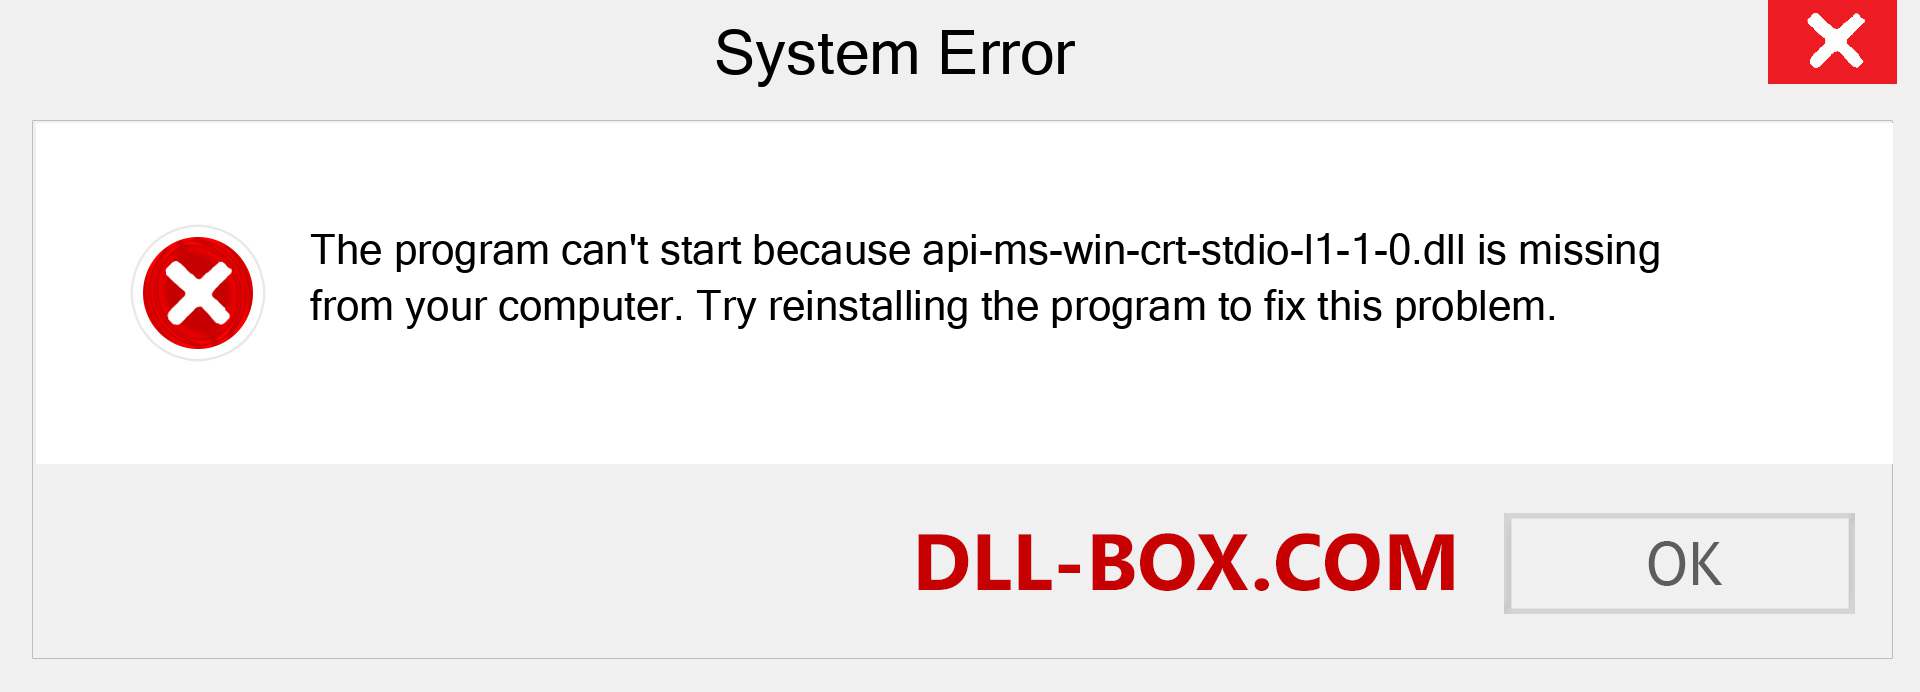  api-ms-win-crt-stdio-l1-1-0.dll file is missing?. Download for Windows 7, 8, 10 - Fix  api-ms-win-crt-stdio-l1-1-0 dll Missing Error on Windows, photos, images